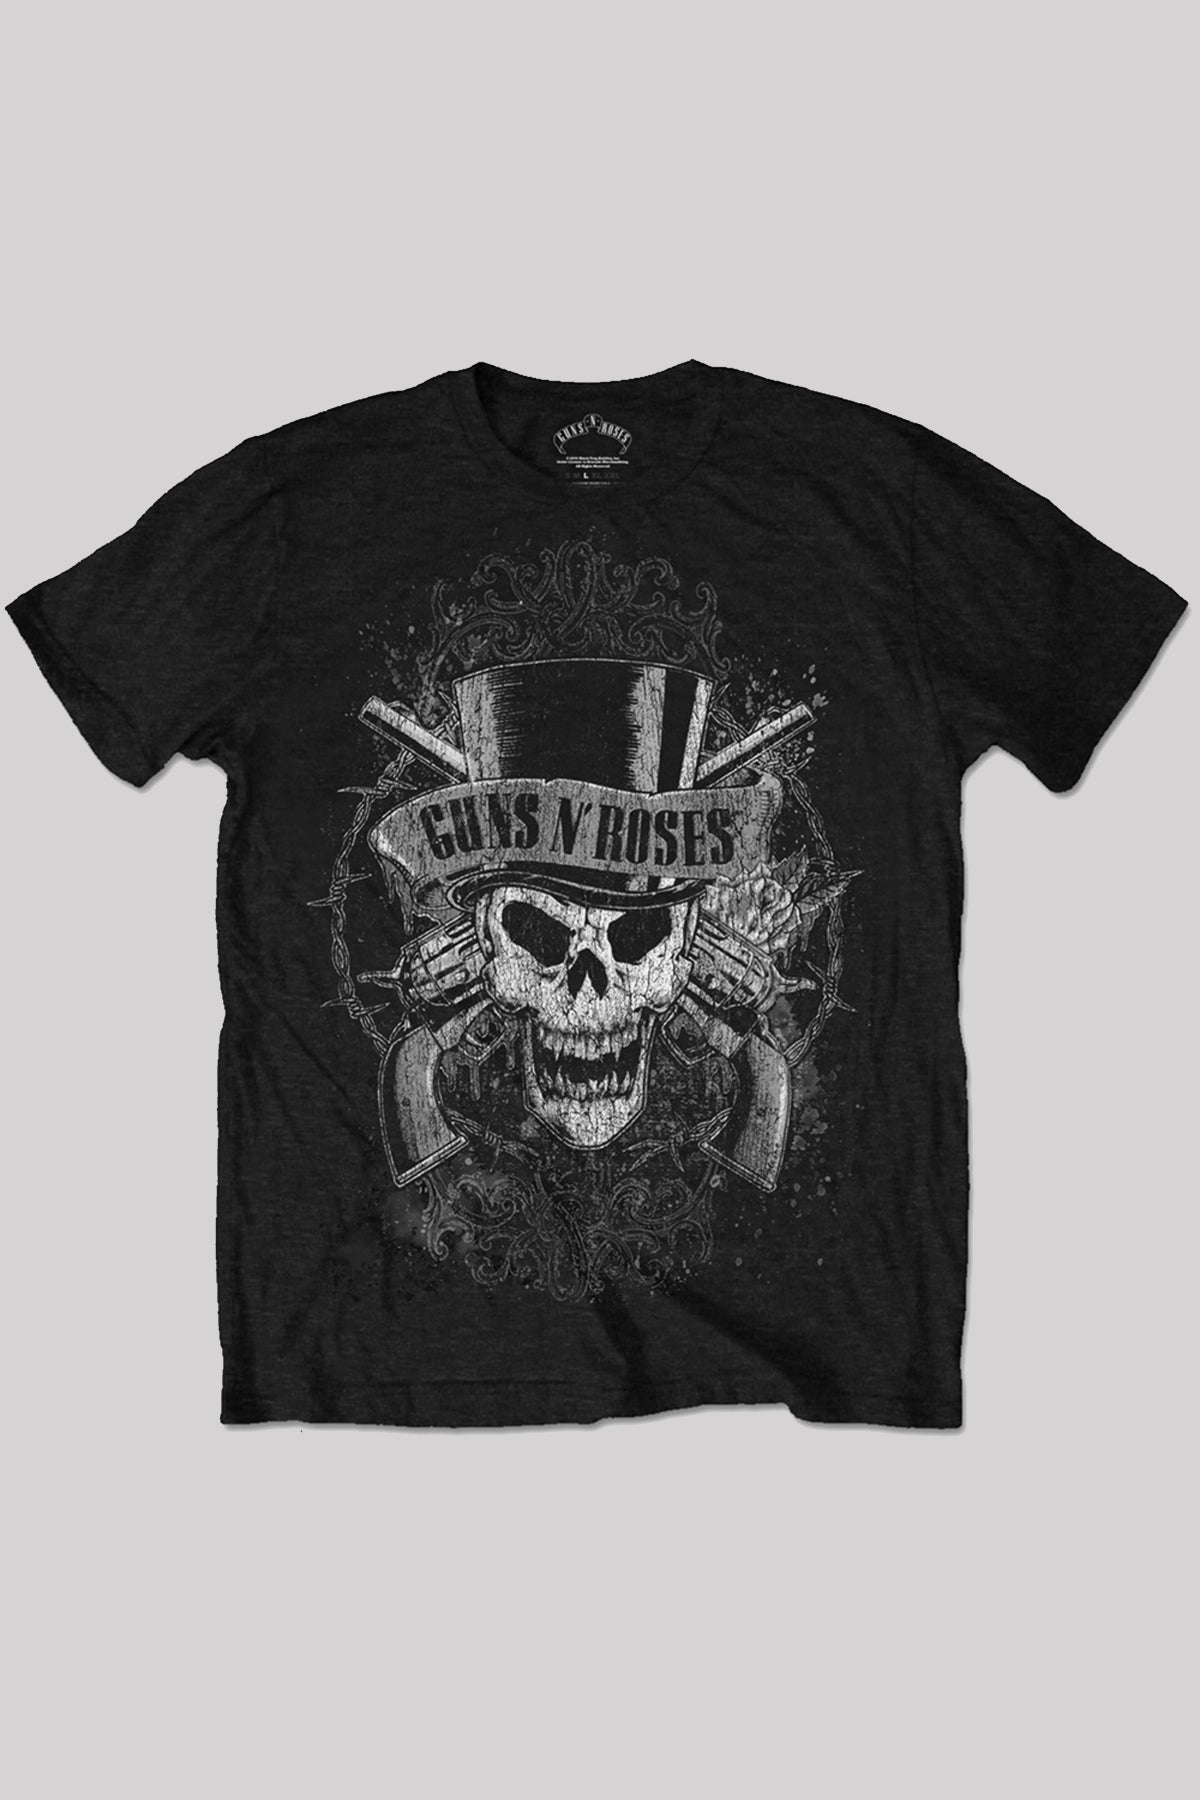 Guns N Roses Faded Skull T-Shirt